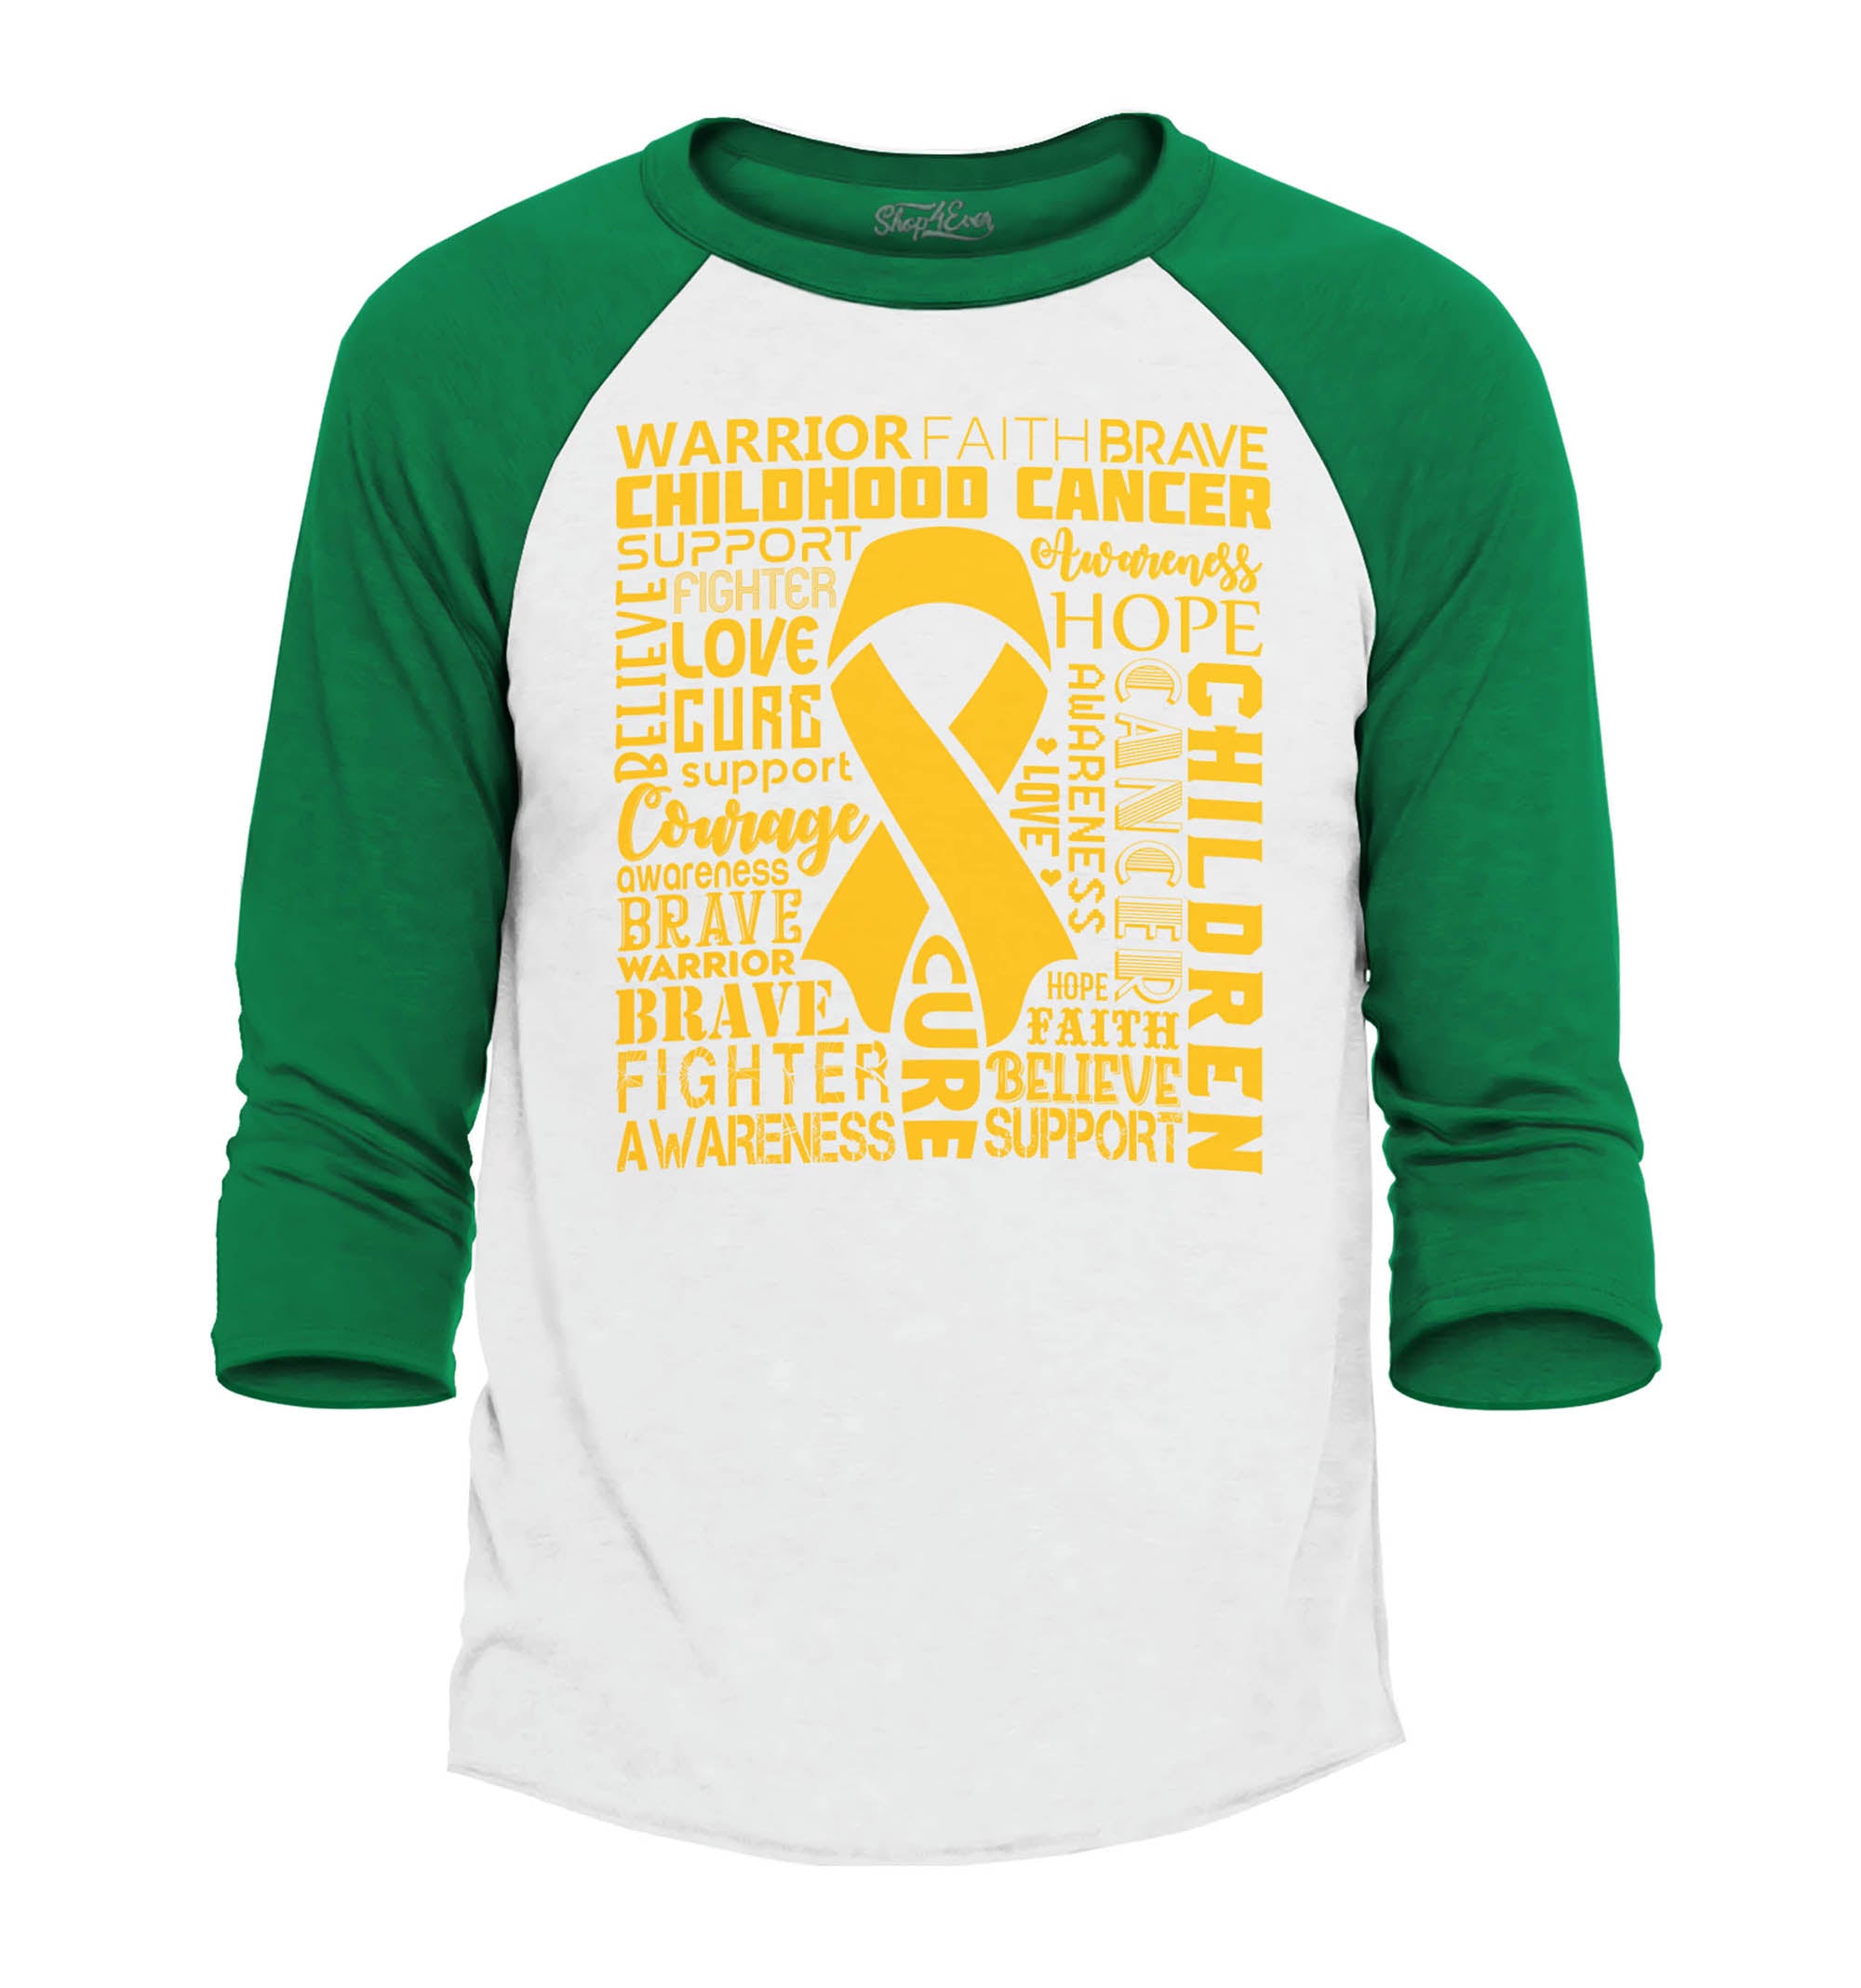 Childhood Cancer Awareness Gold Ribbon Word Cloud Raglan Baseball Shirt